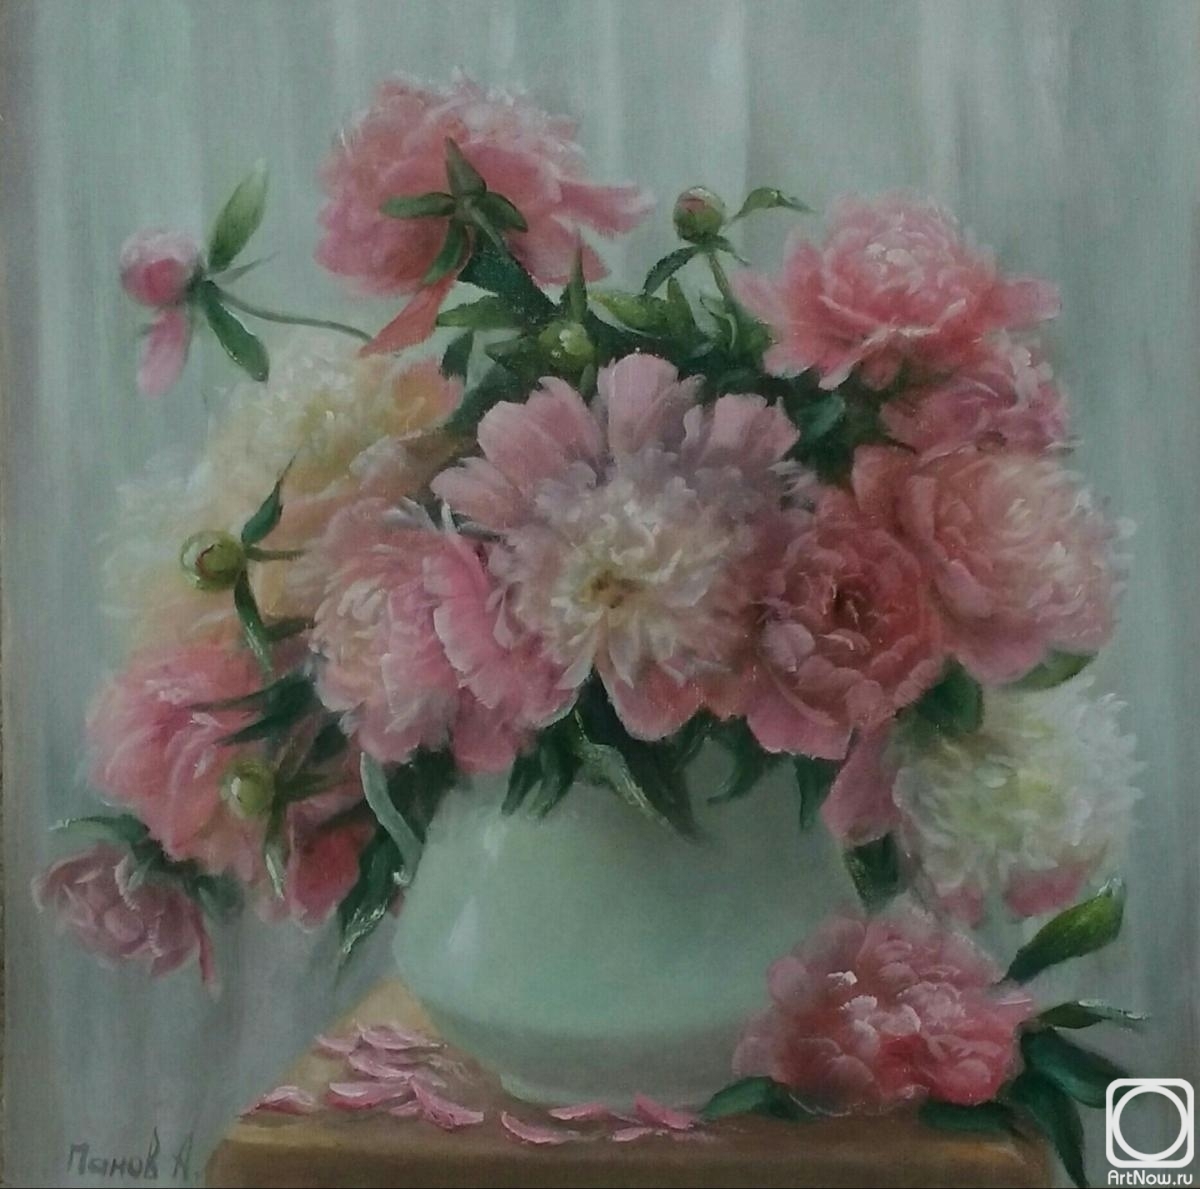 Panov Aleksandr. Bouquet of pink peonies